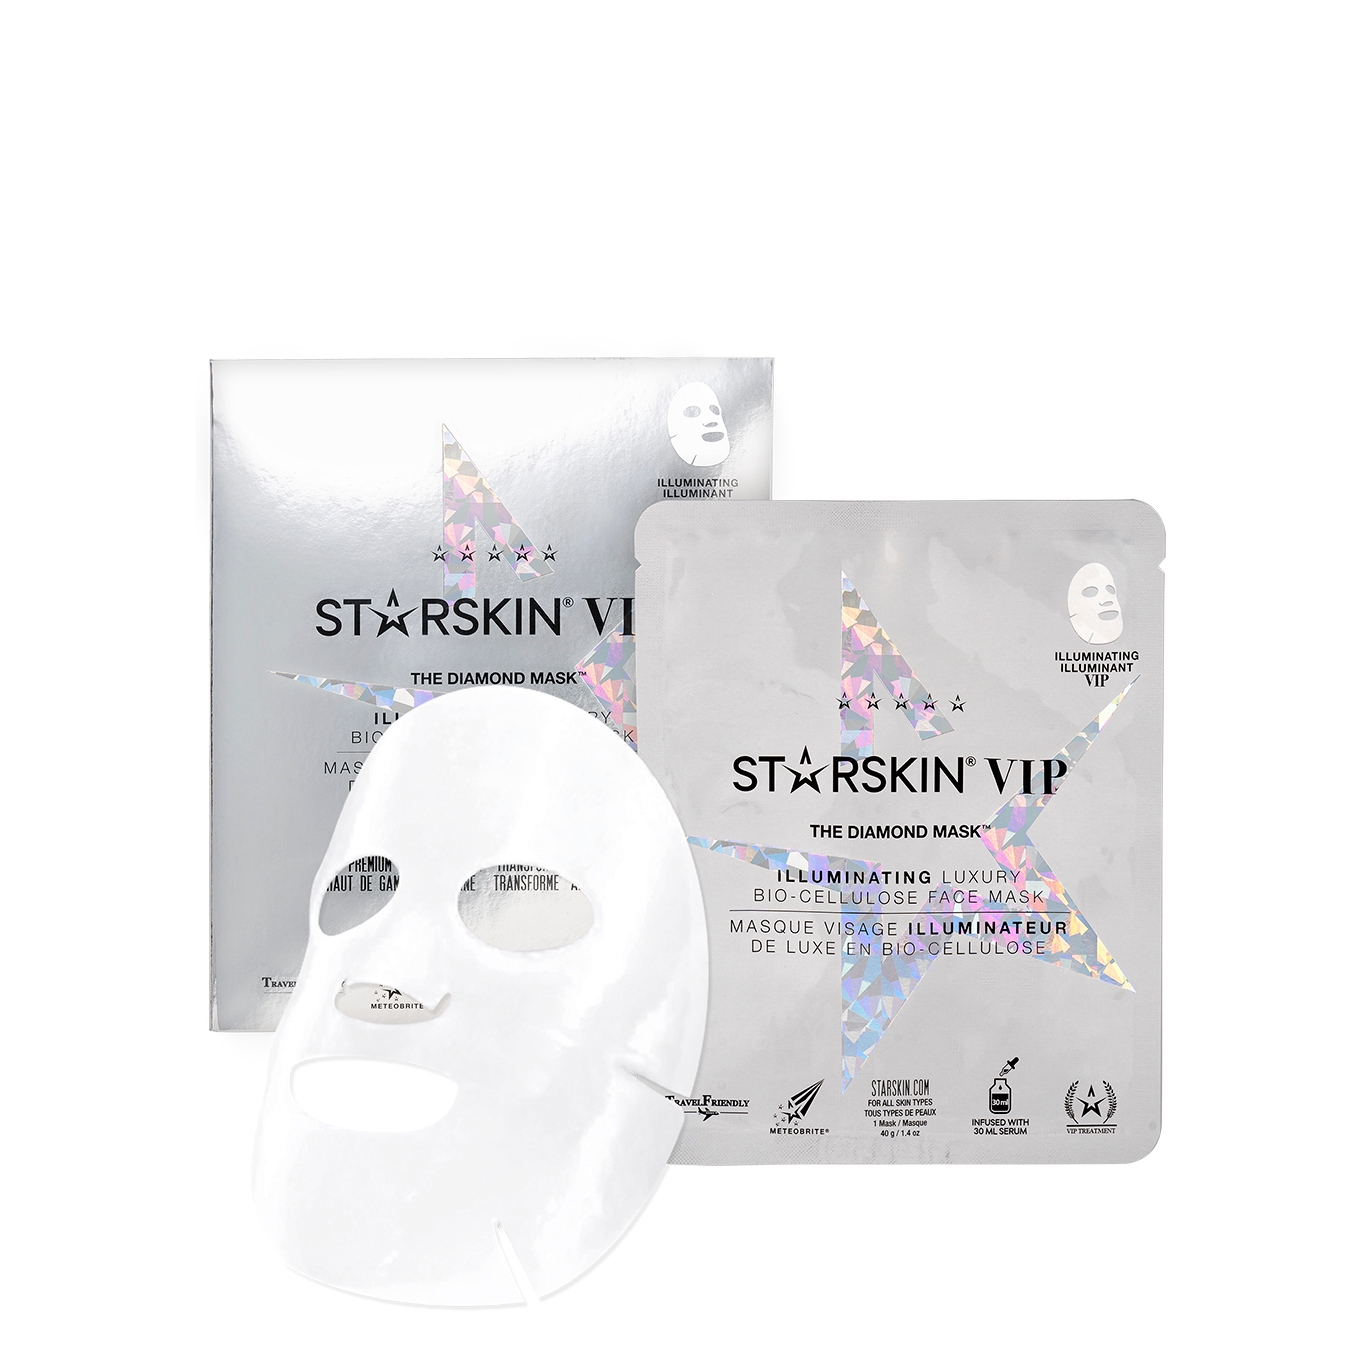 The Diamond Mask Vip Illuminating Bio-Cellulose Face Mask